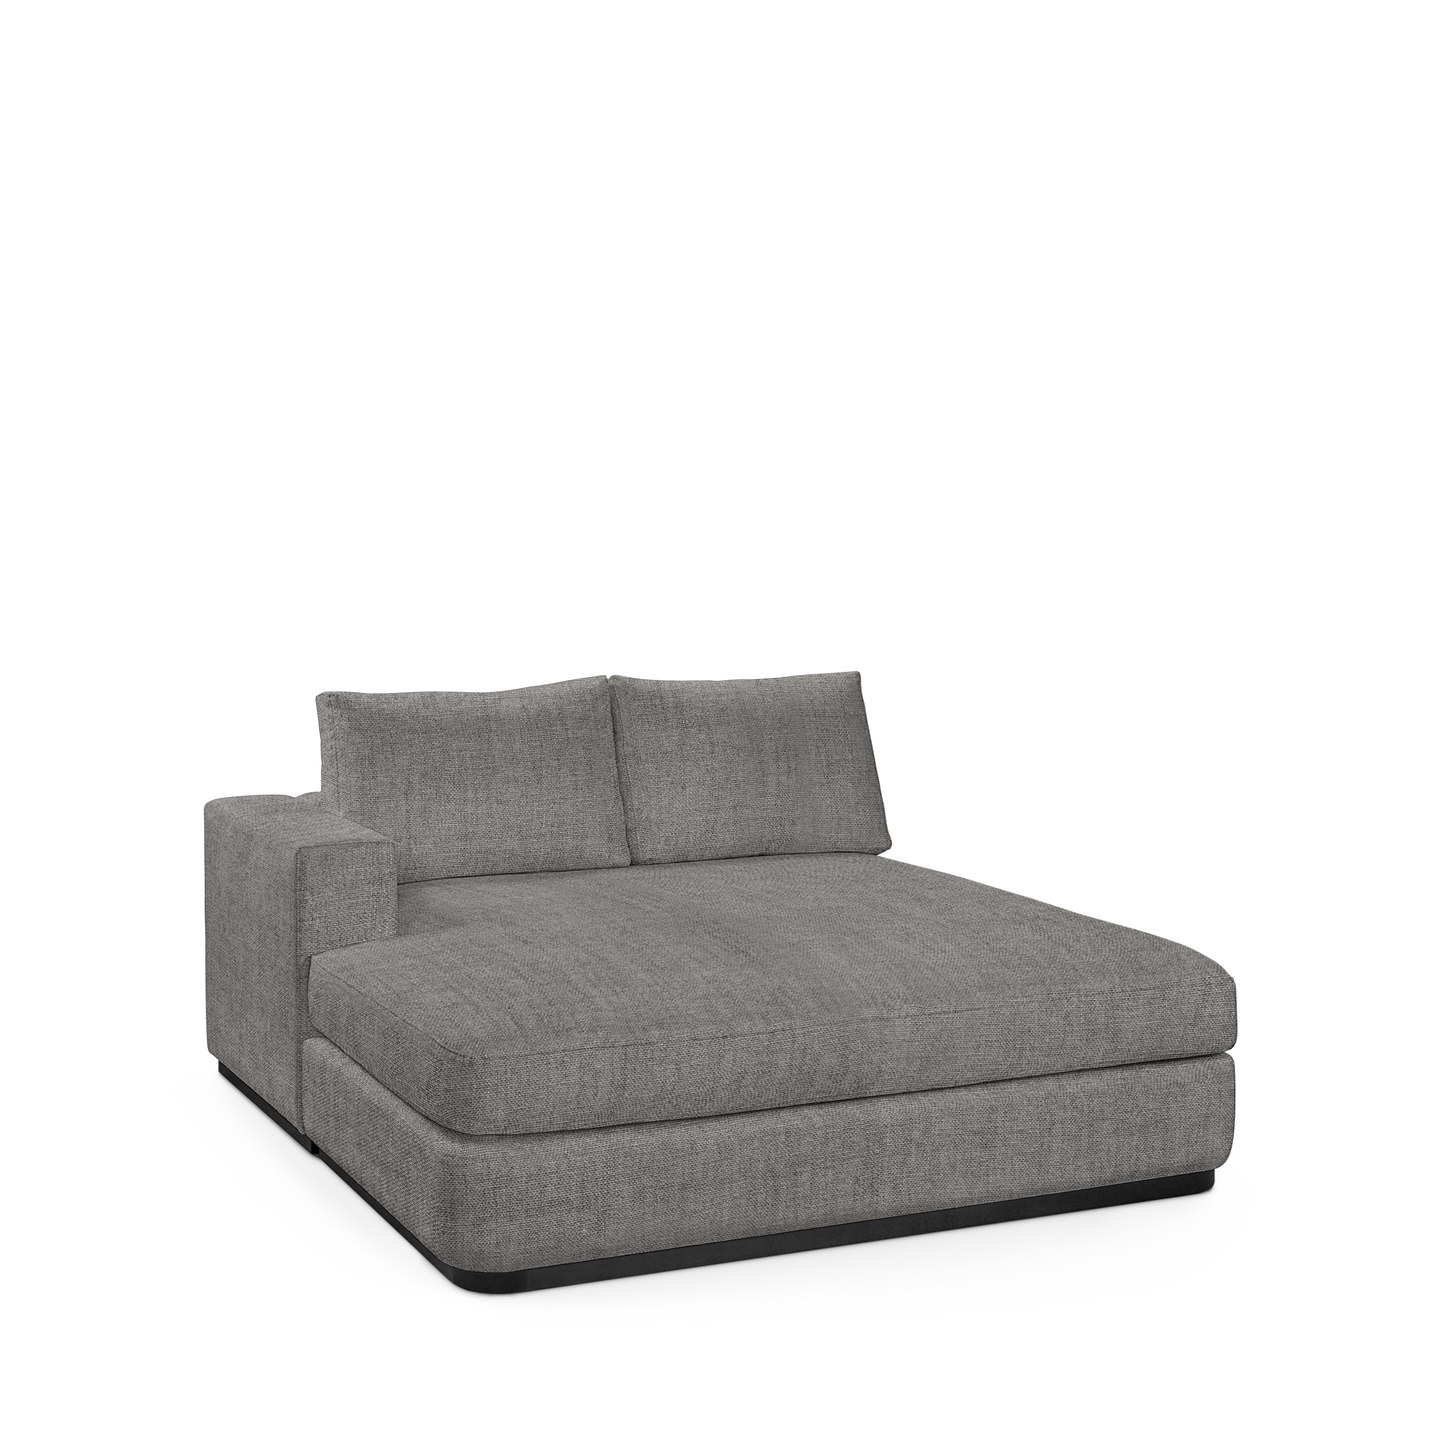 ATLAS 160 Lounge Bed arm rest left with dark grey textile